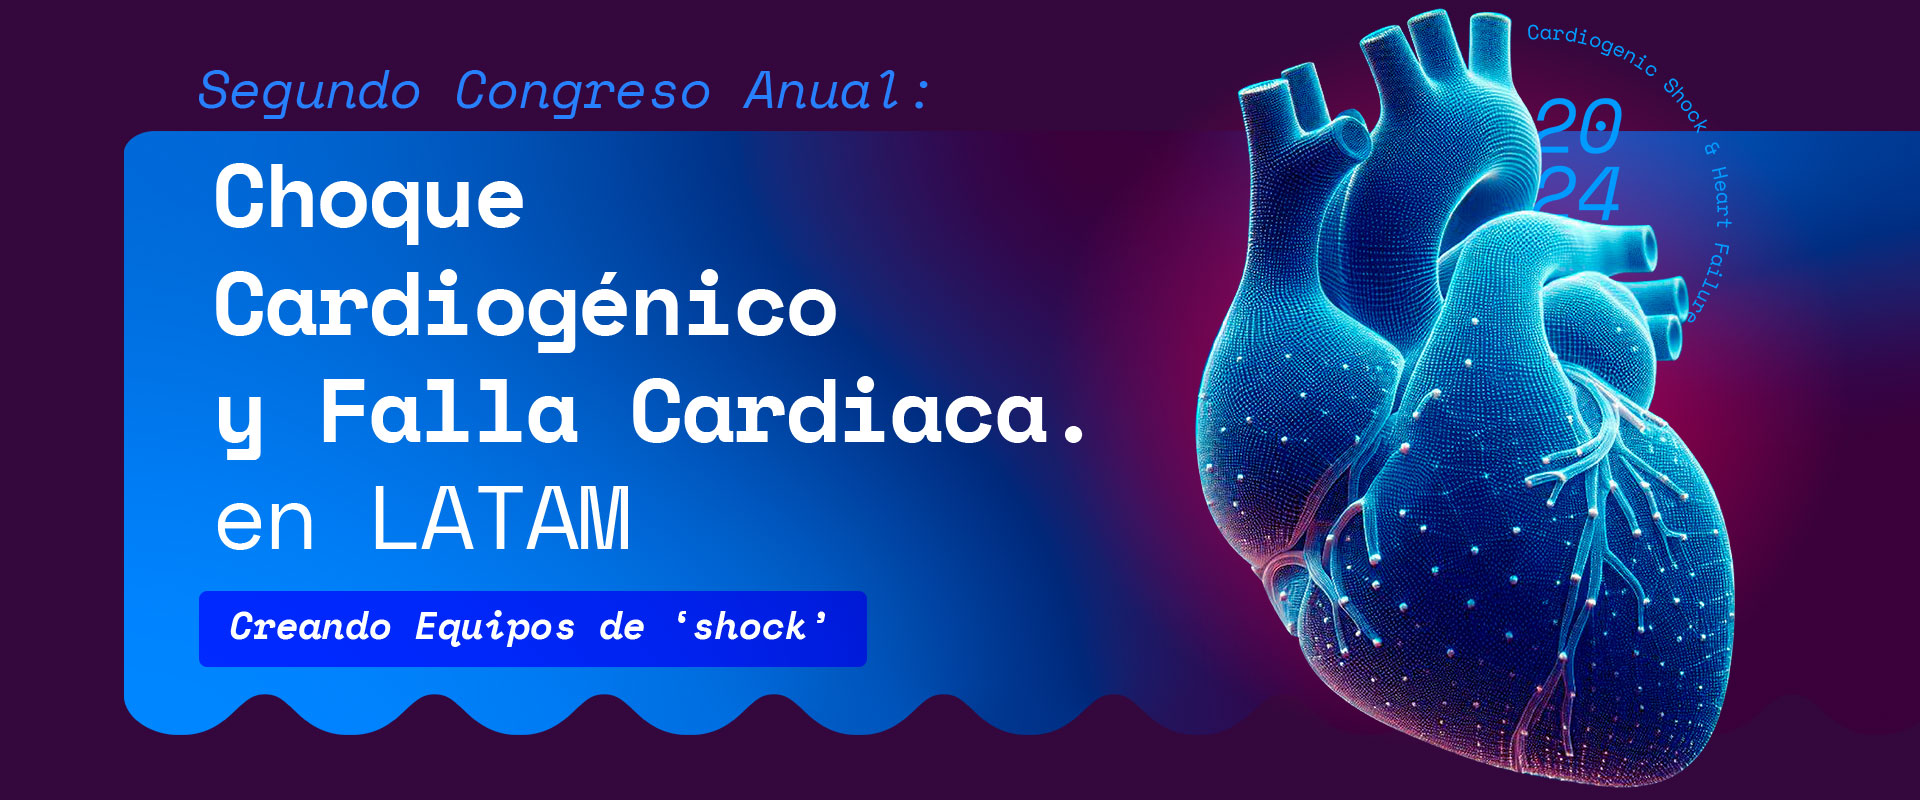 cardiogenic-banner